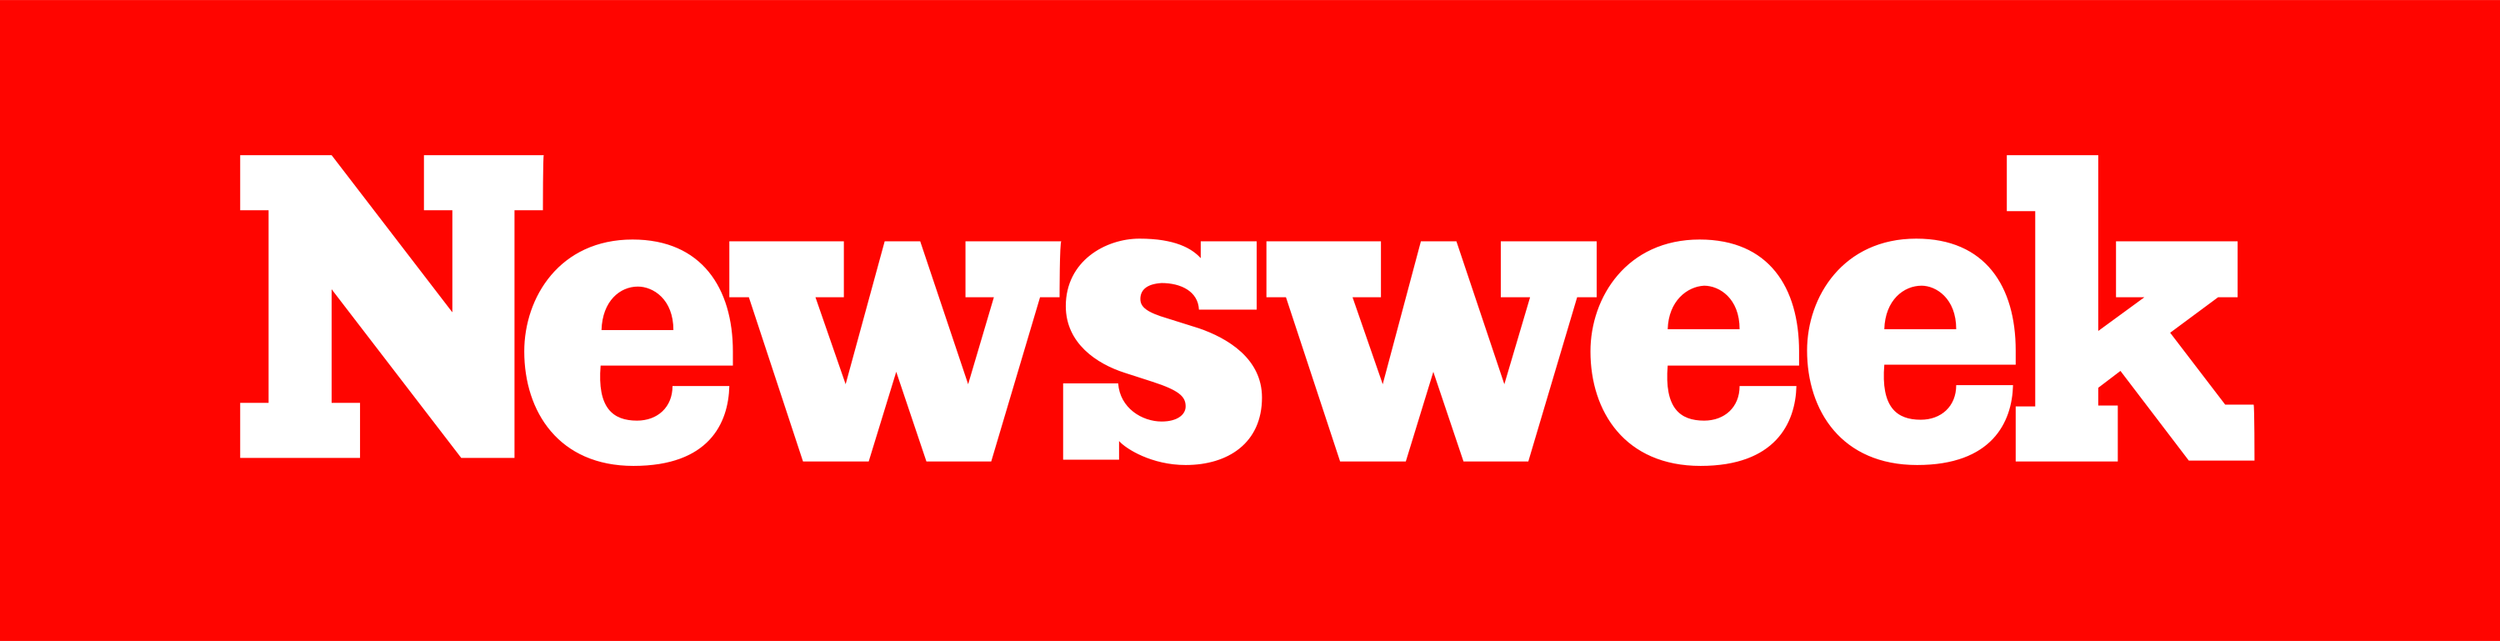 Newsweek_Logo.png